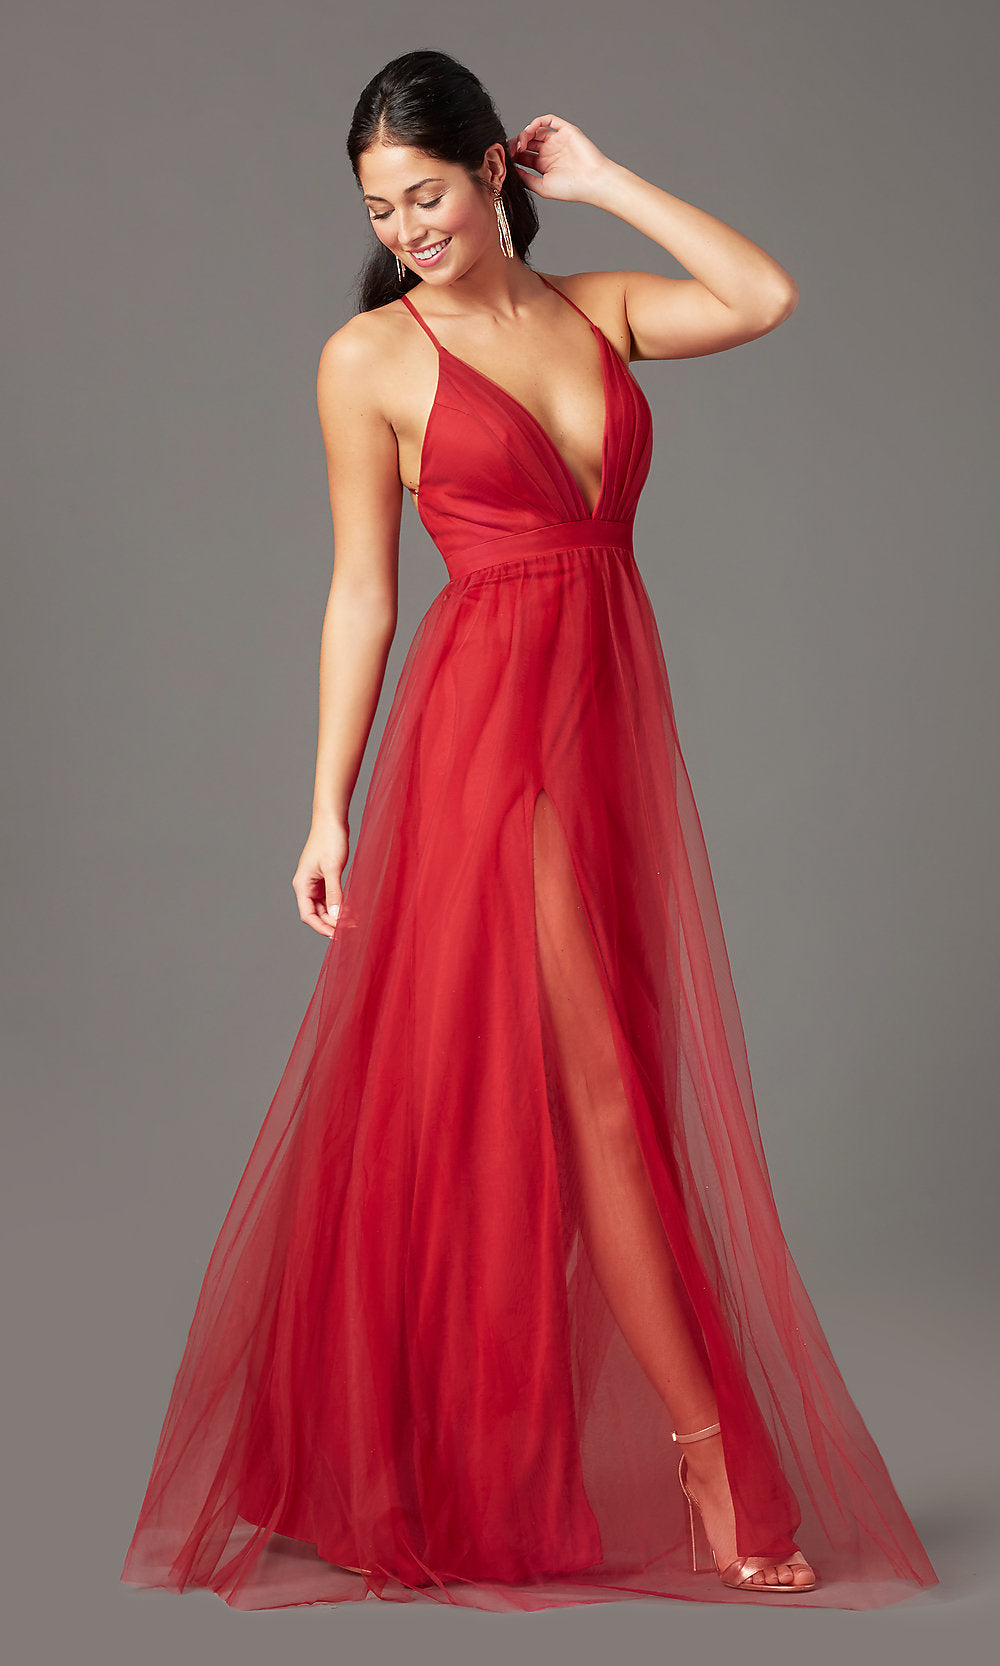 Chianti Chianti Red Long Formal Prom Dress by PromGirl